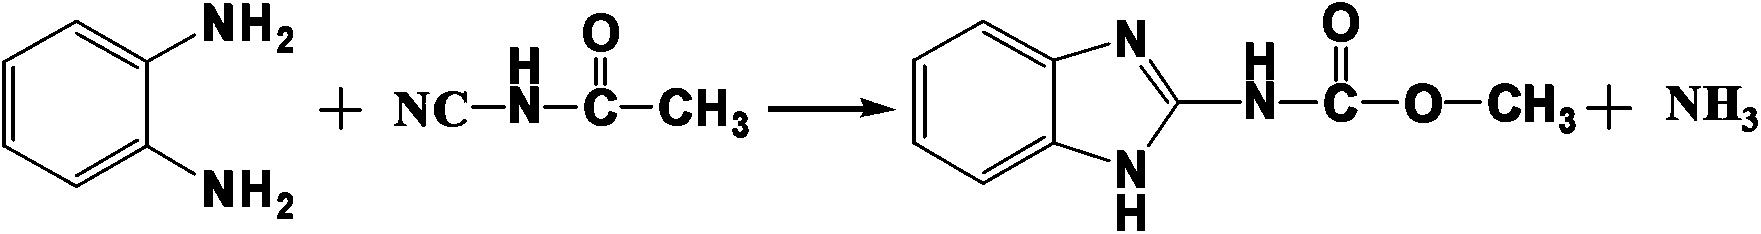 Synthetic method of N-(2-benzimidazolyl)-methyl carbamate